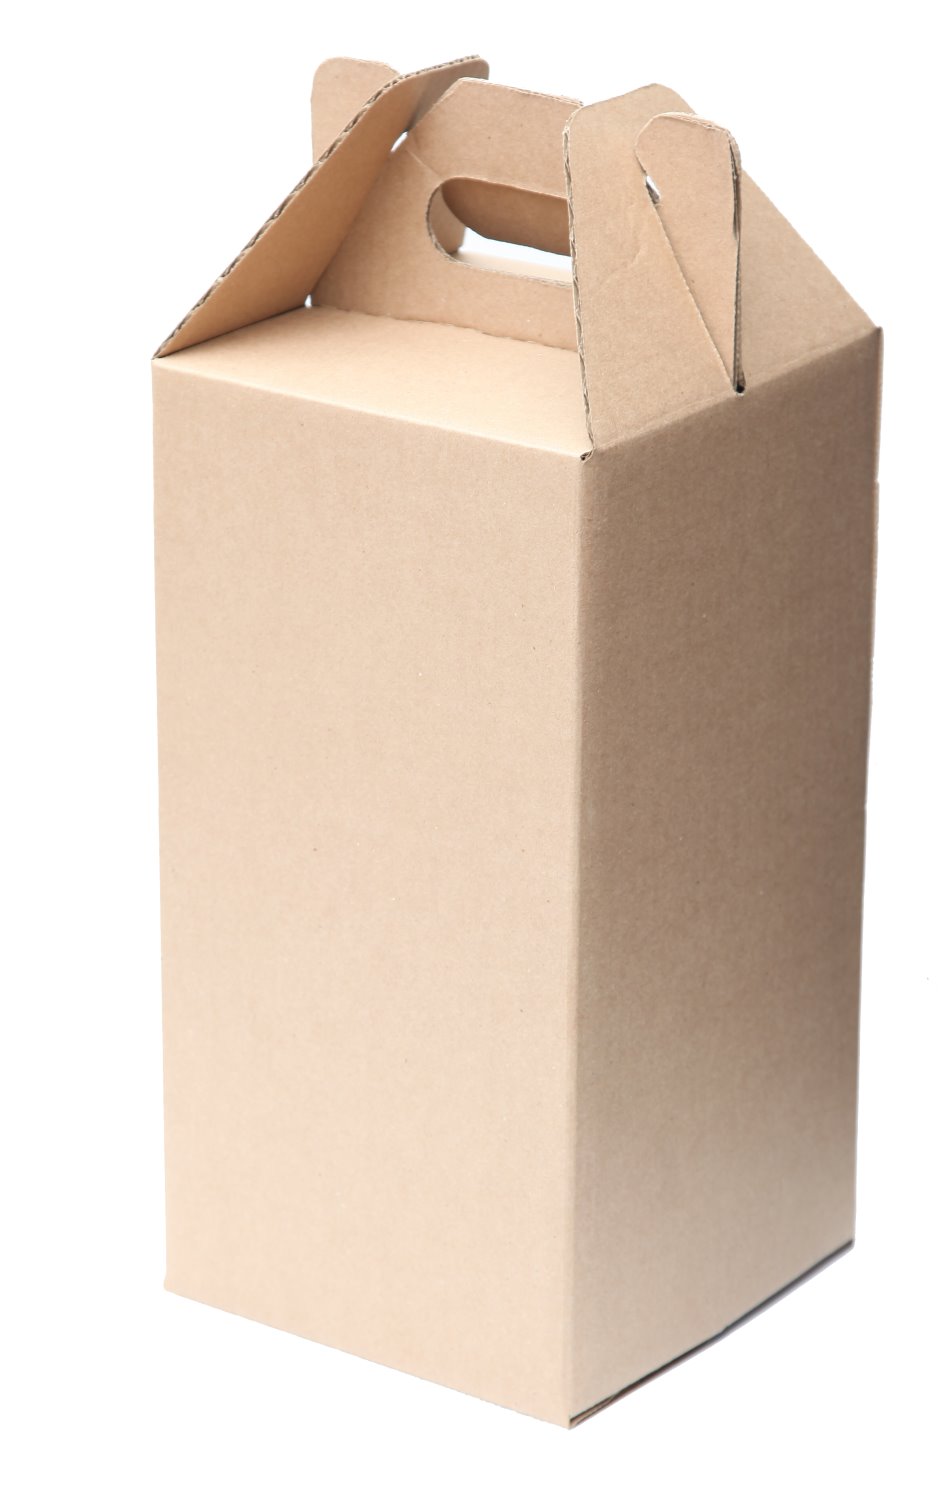 Cardboard wine carrier, Bottle Boxes